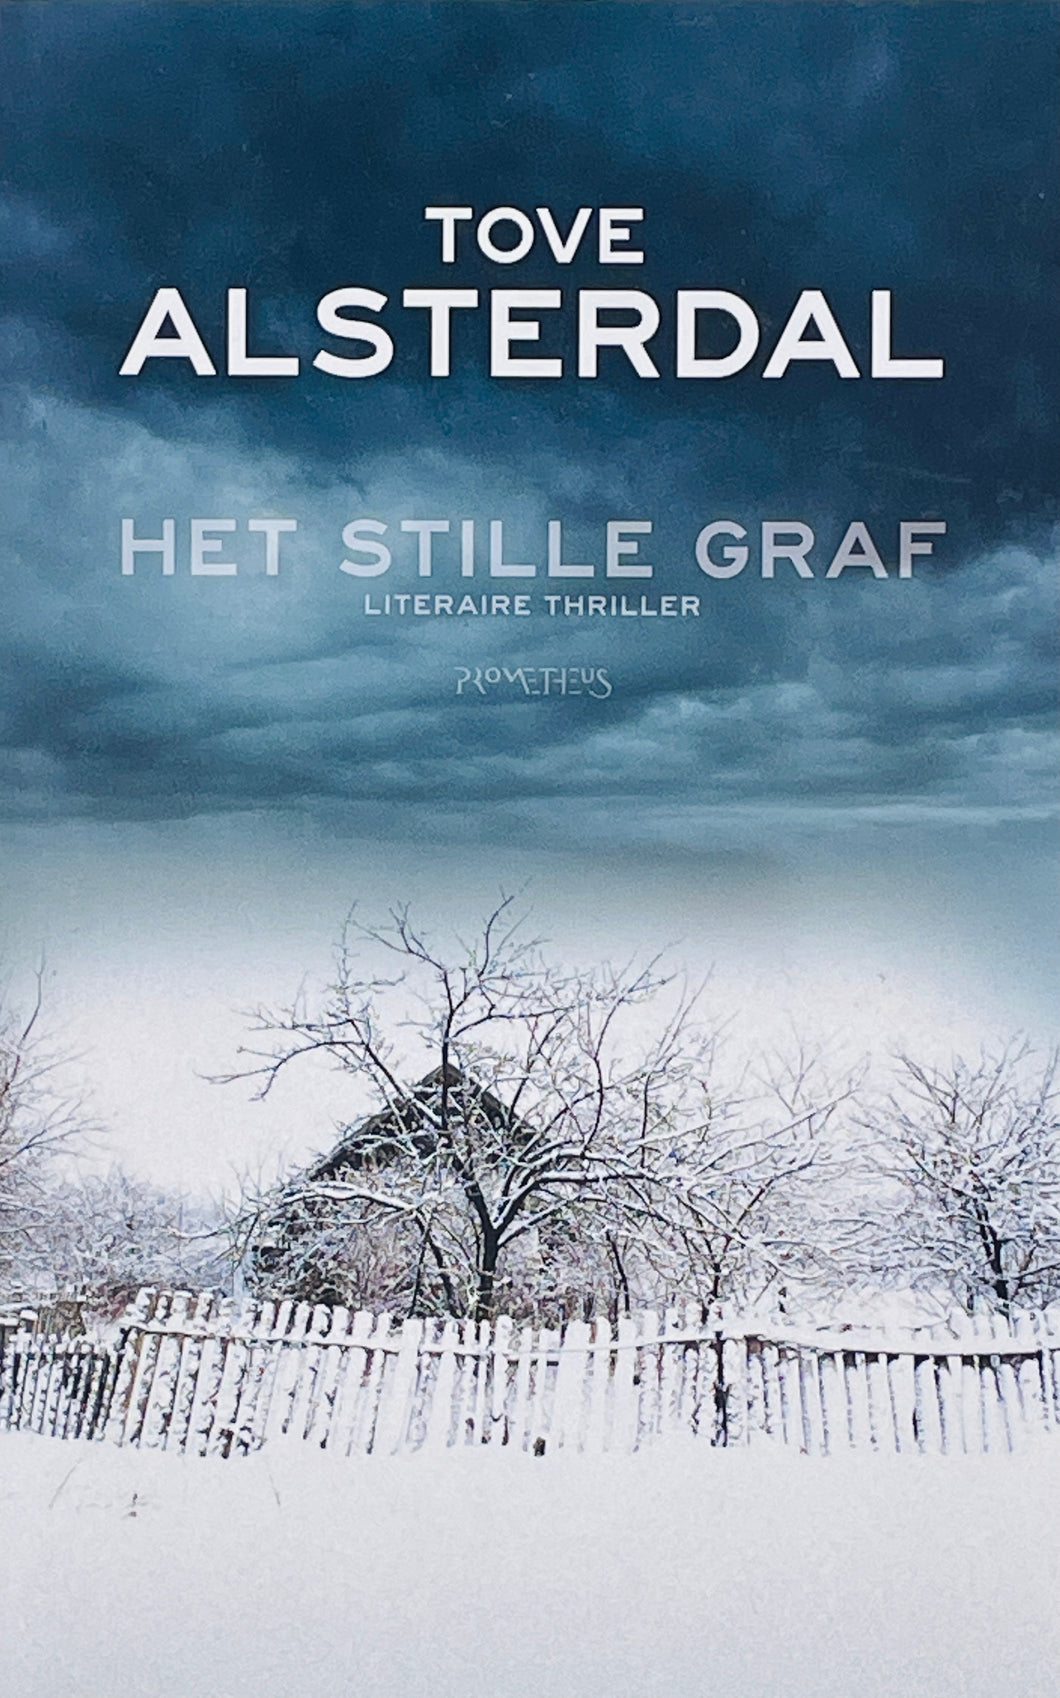 Alsterdal Tove - Het stille graf